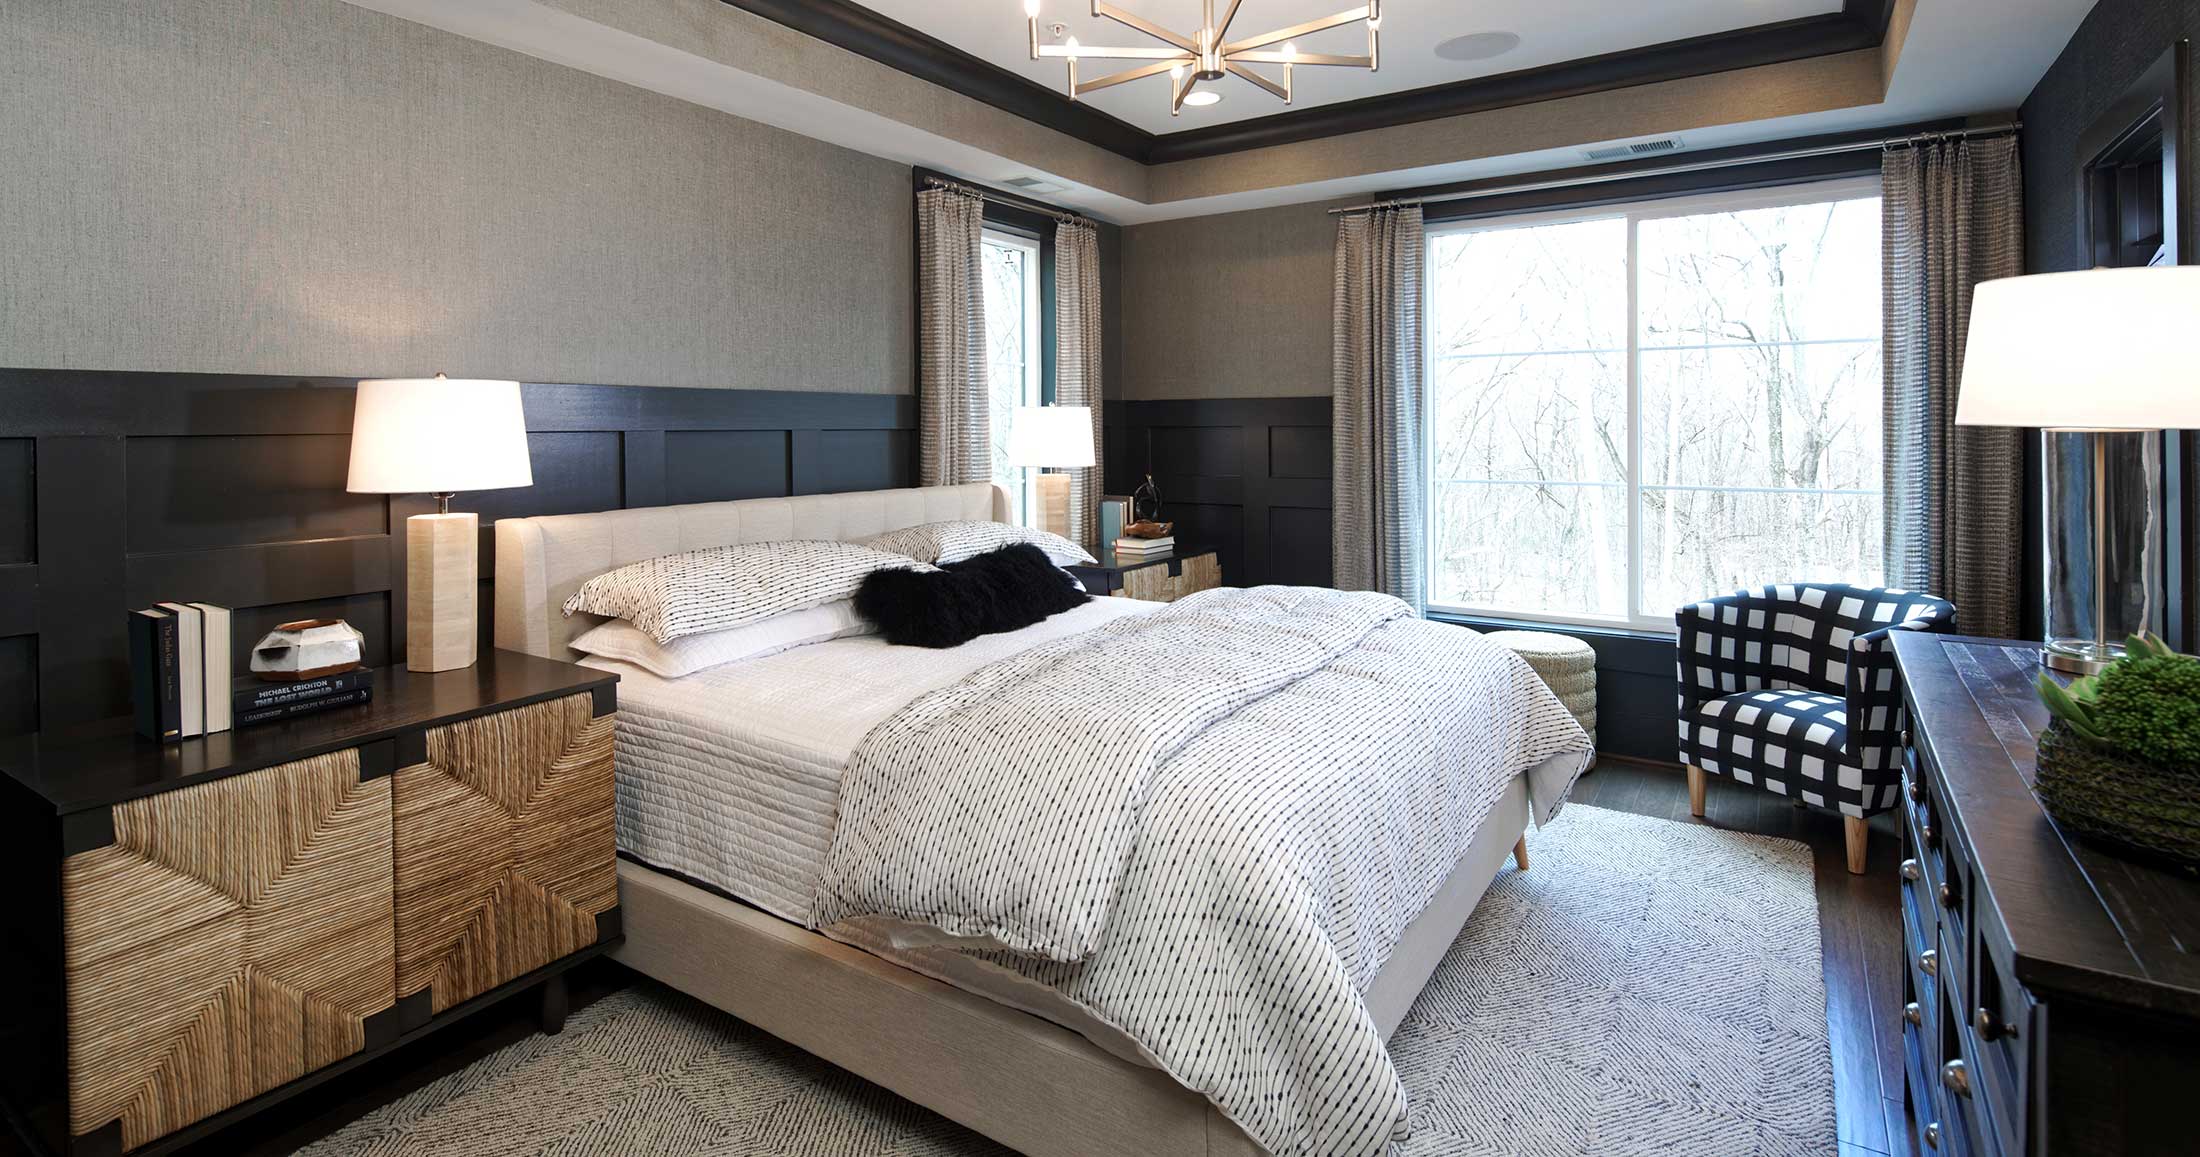 Bedroom, Townhomes in Chantilly VA